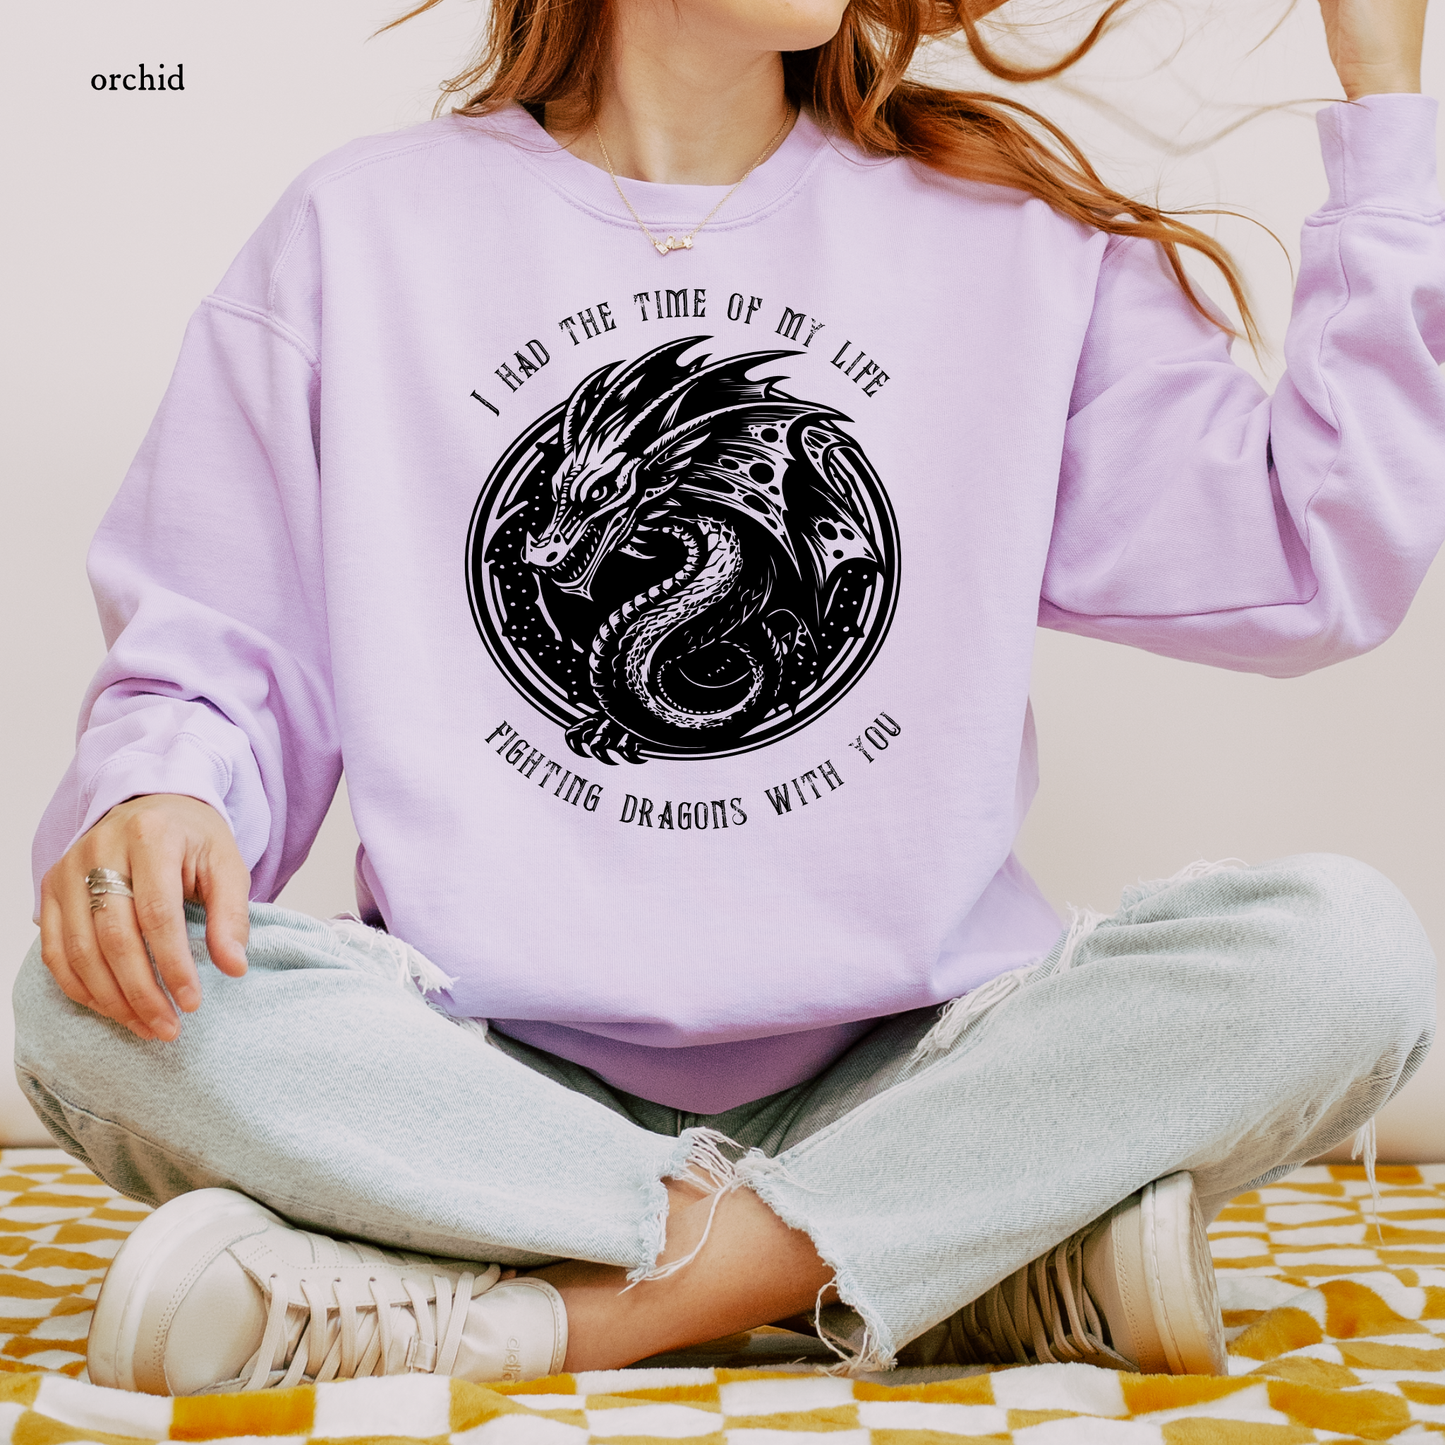 Fighting Dragons - Comfort Color Sweatshirts